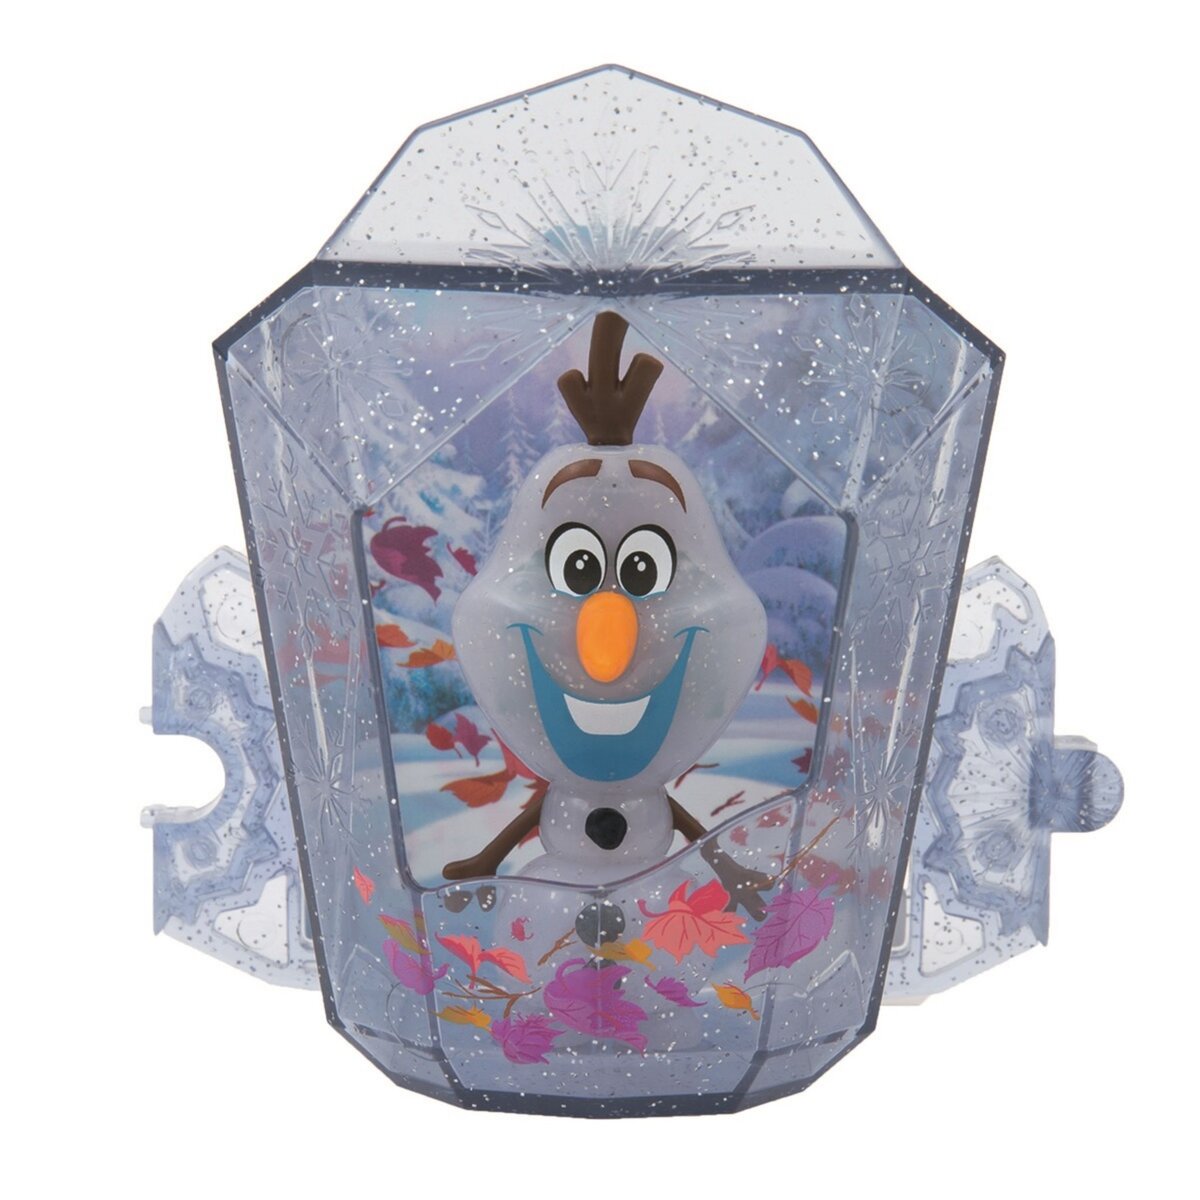 GIOCHI PREZIOSI Whisper & Glow - Maison avec figurine lumineuse Olaf - La reine des neiges 2